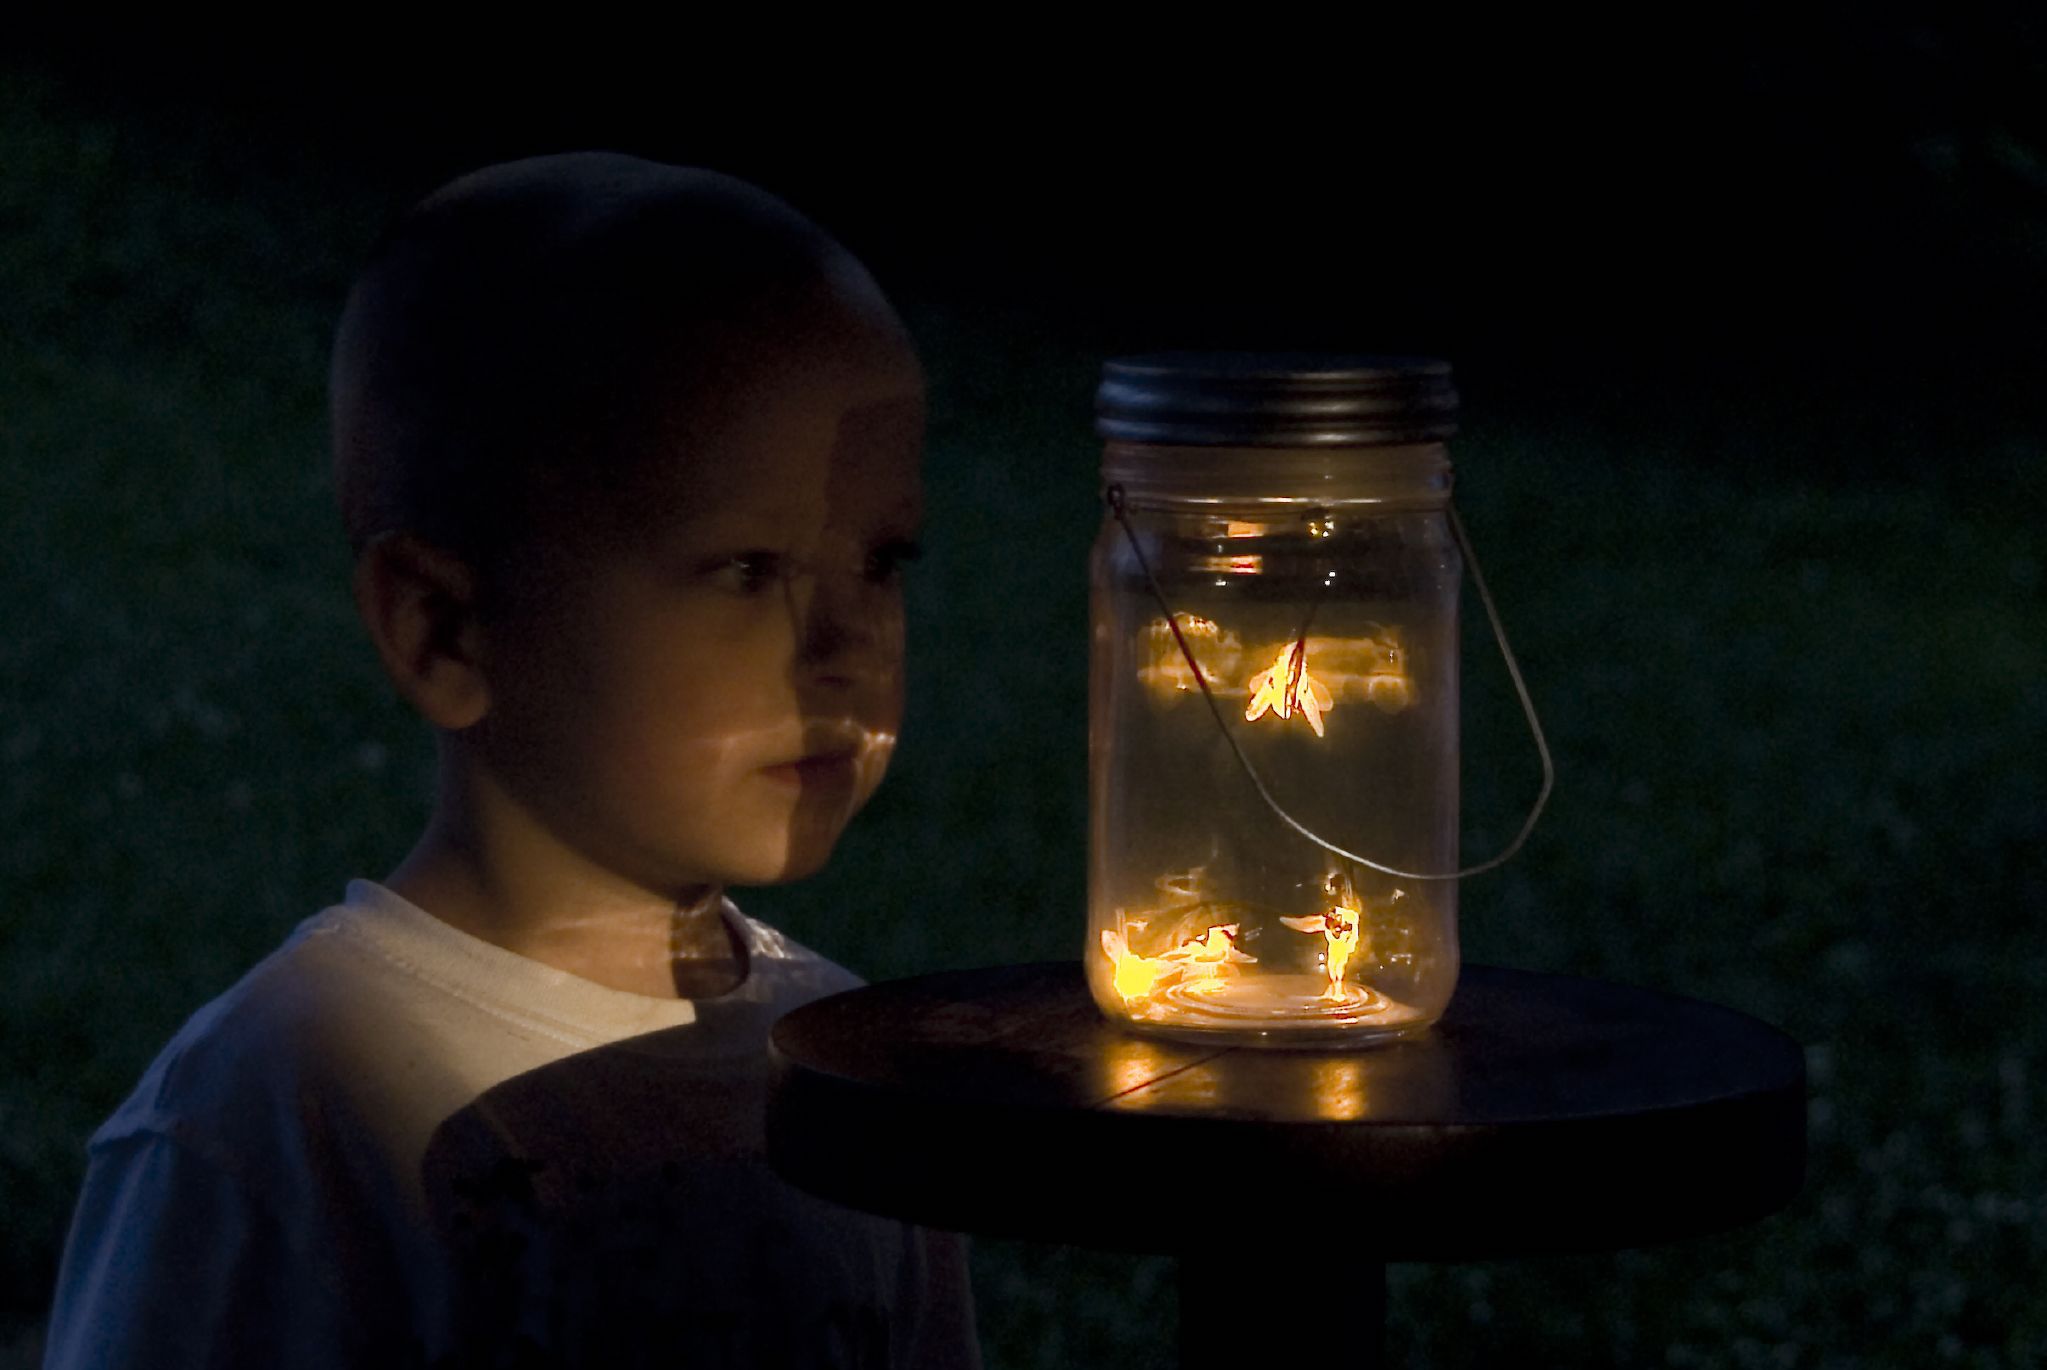 “Fireflies” © James Miles; Creative Commons license